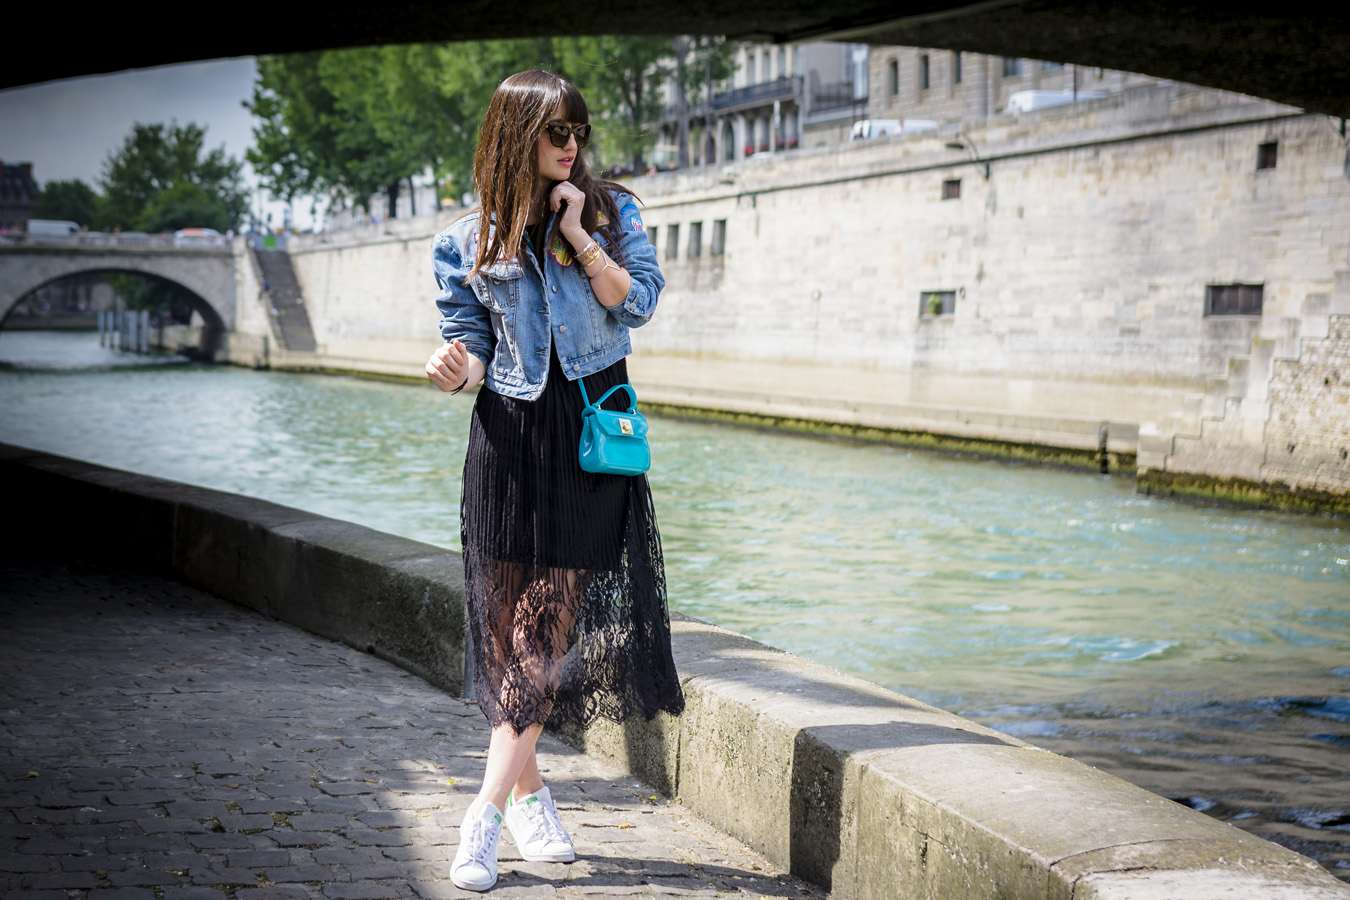 Parisian fashion blogger